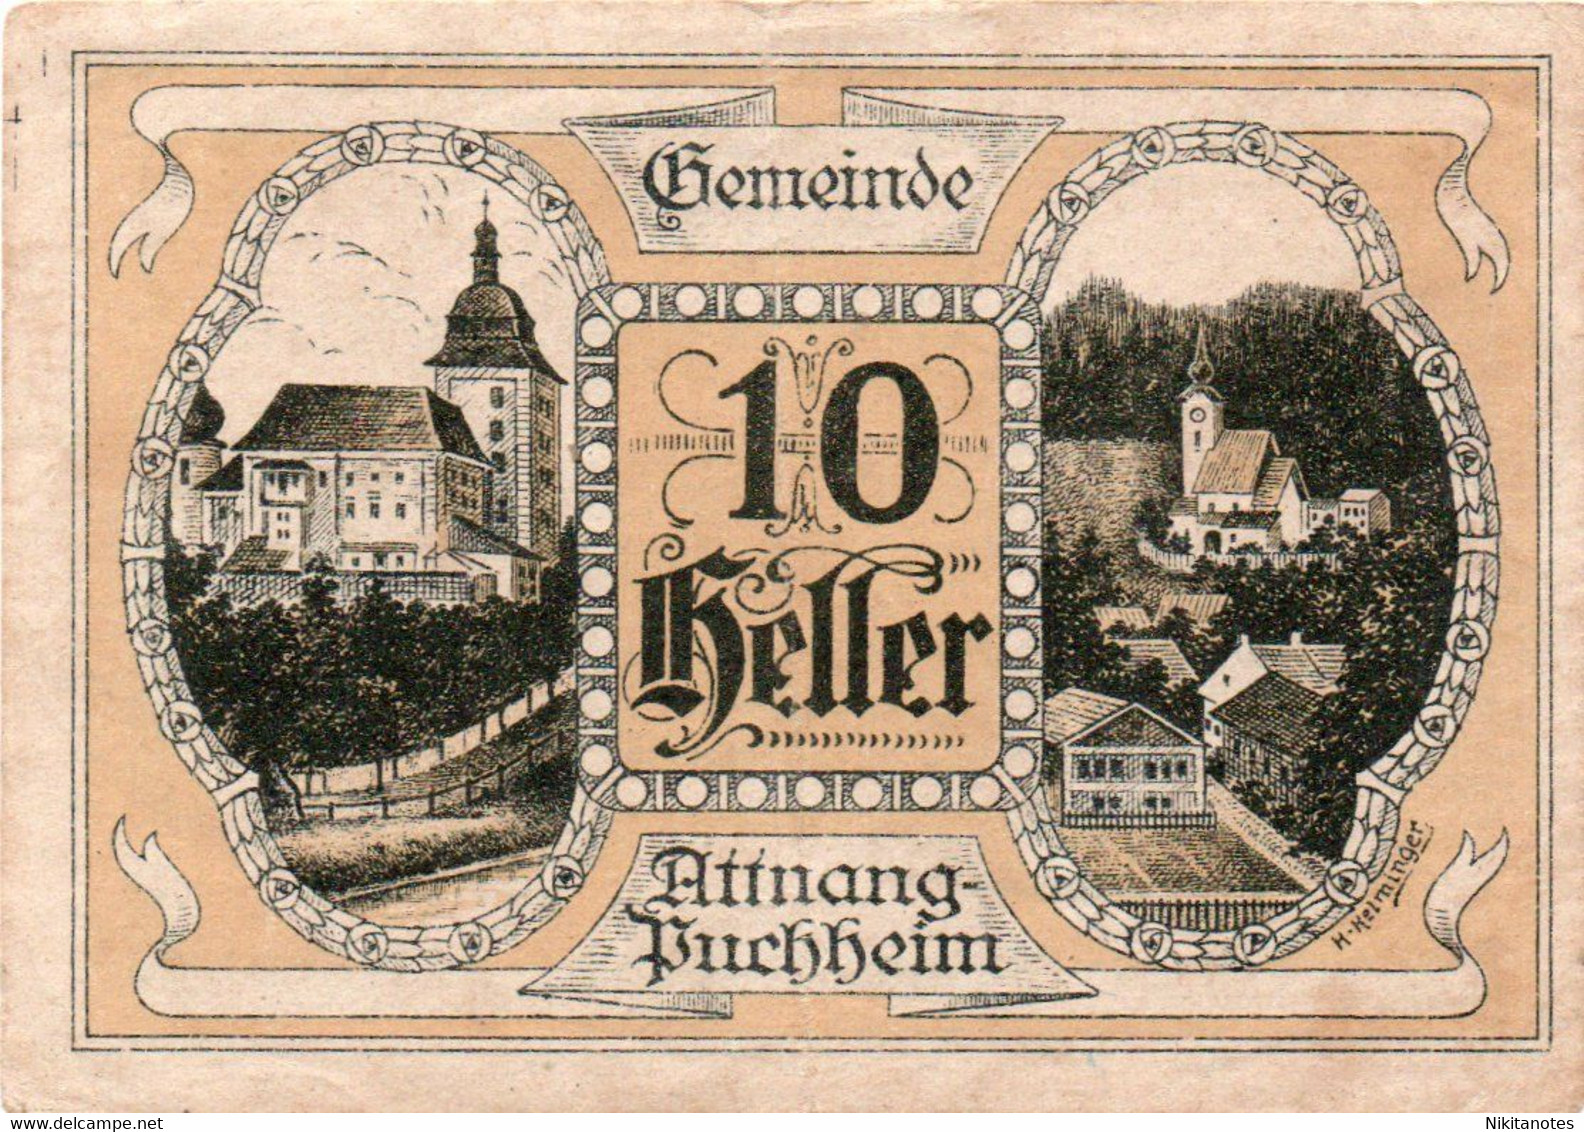 Austria Notgeld 10 Heller 1920 Attnang-Puchheim See Scan Note - Oostenrijk